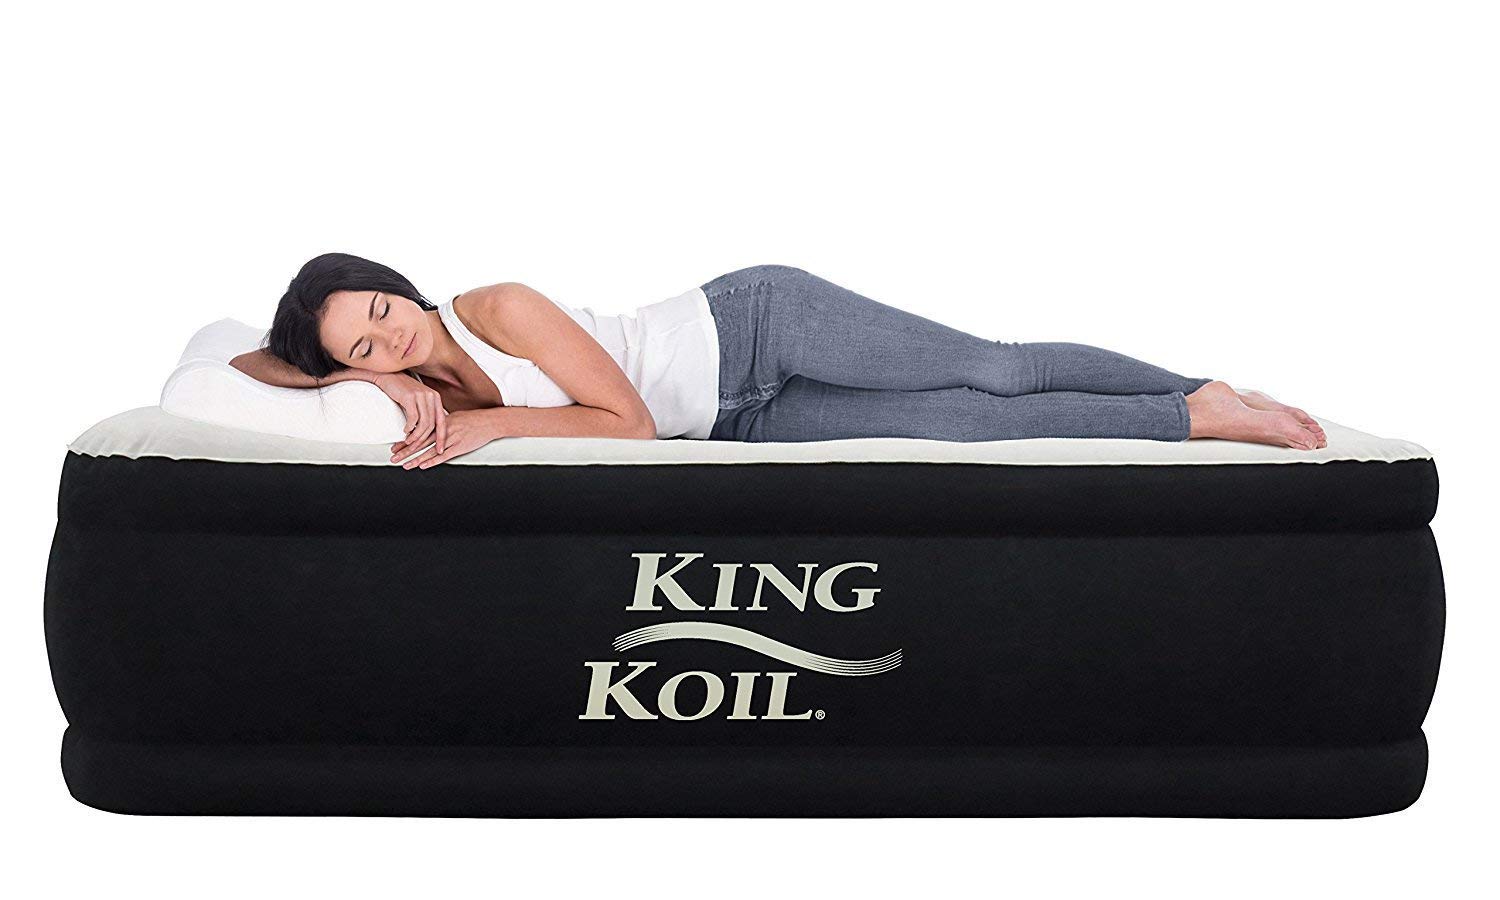 king koil air mattress reviews